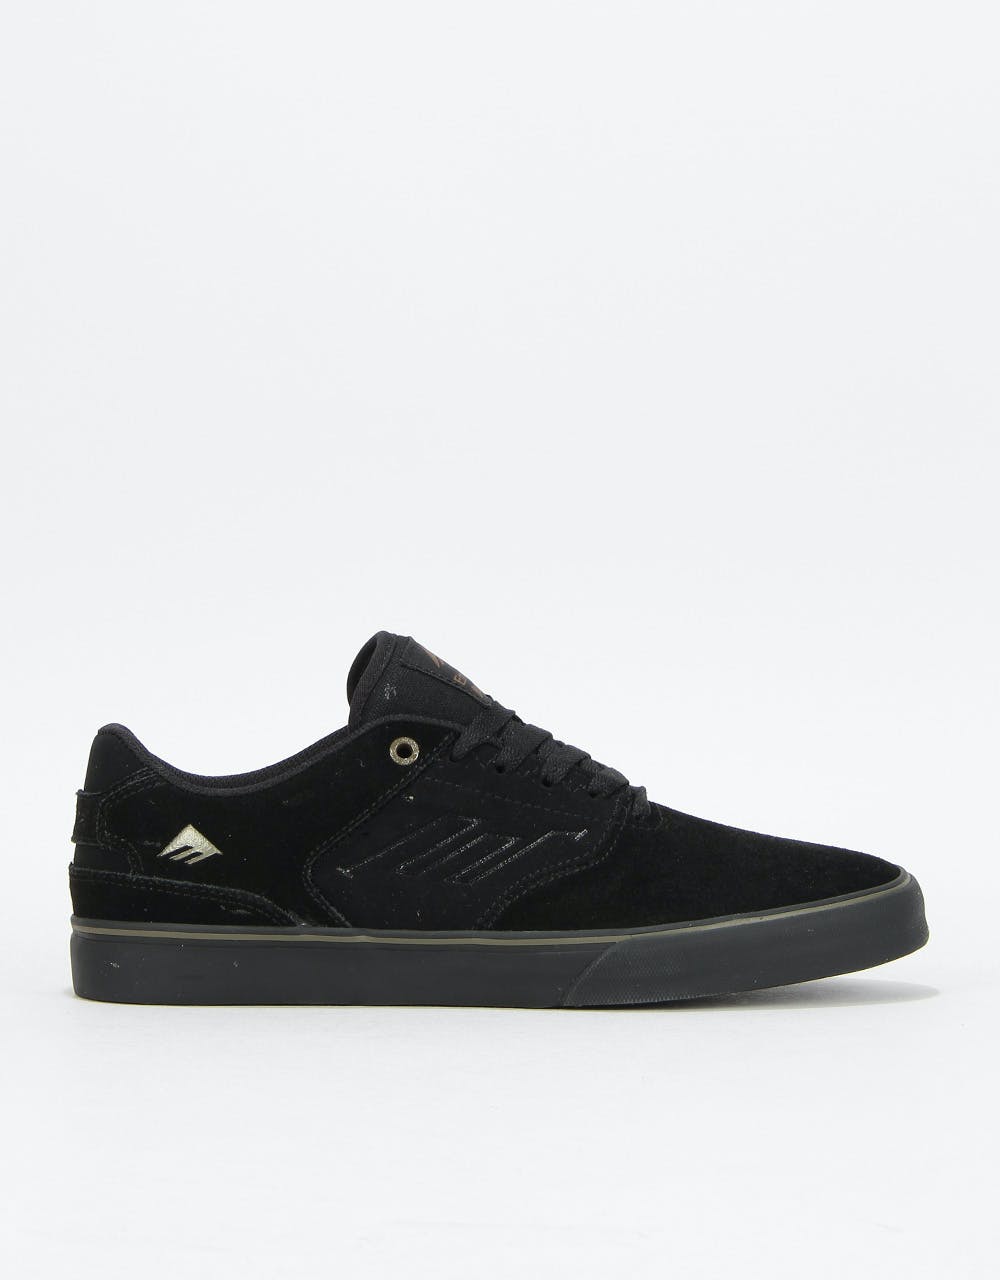 Emerica Reynolds Low Vulc Skate Shoes - Black/Olive/Black